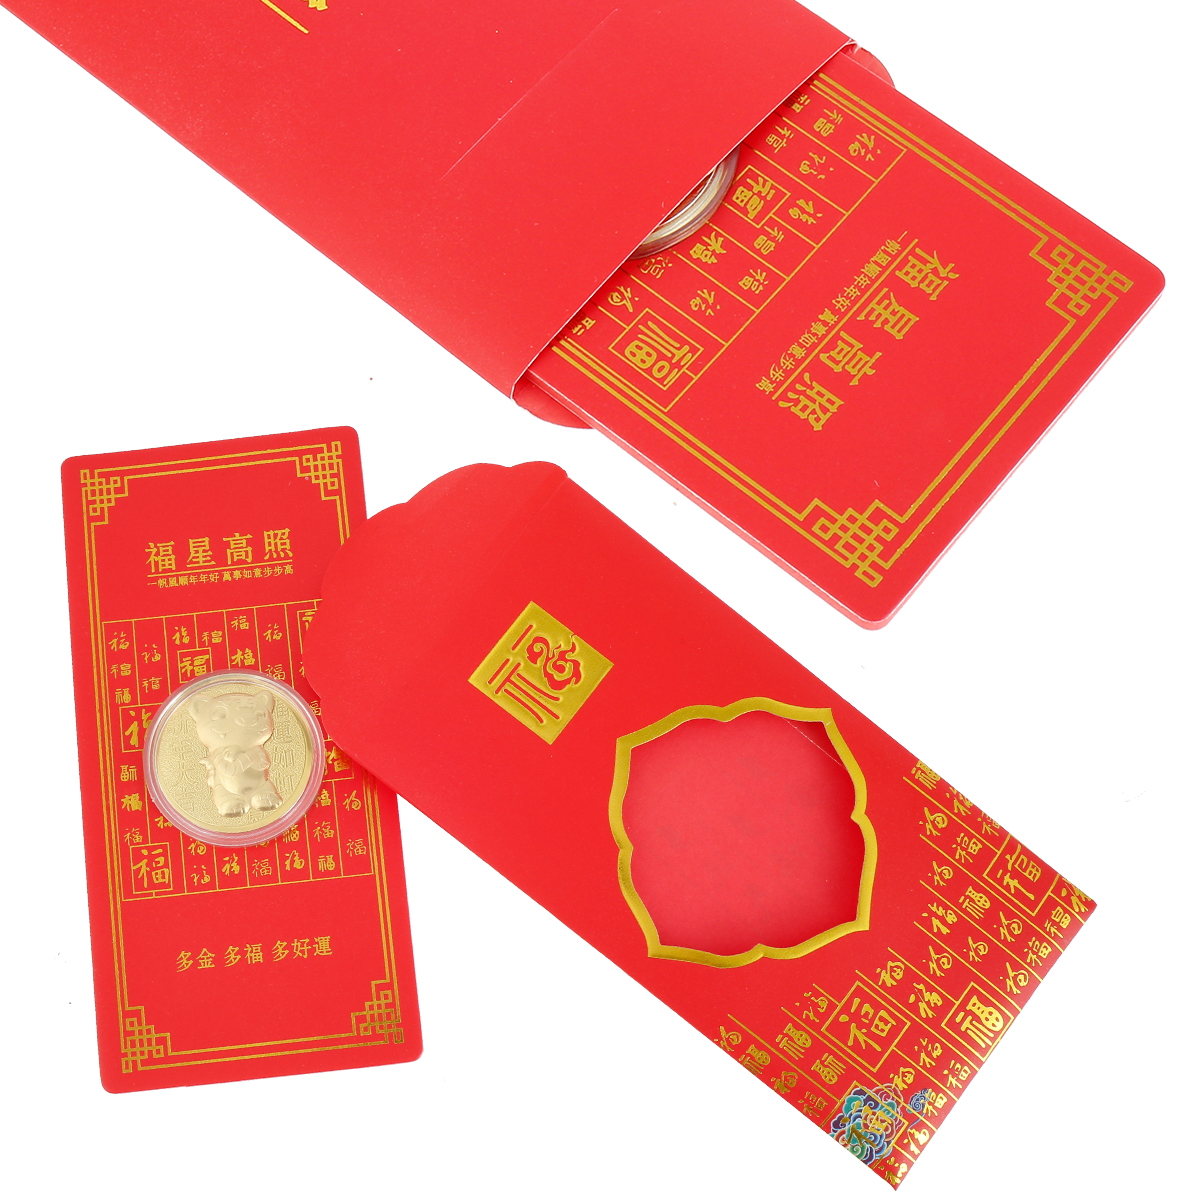 Red Pocket 60pcs Spring Festival Red Envelope Traditional Vietnamese Gifts  Lucky Money Envelopes Gif…See more Red Pocket 60pcs Spring Festival Red